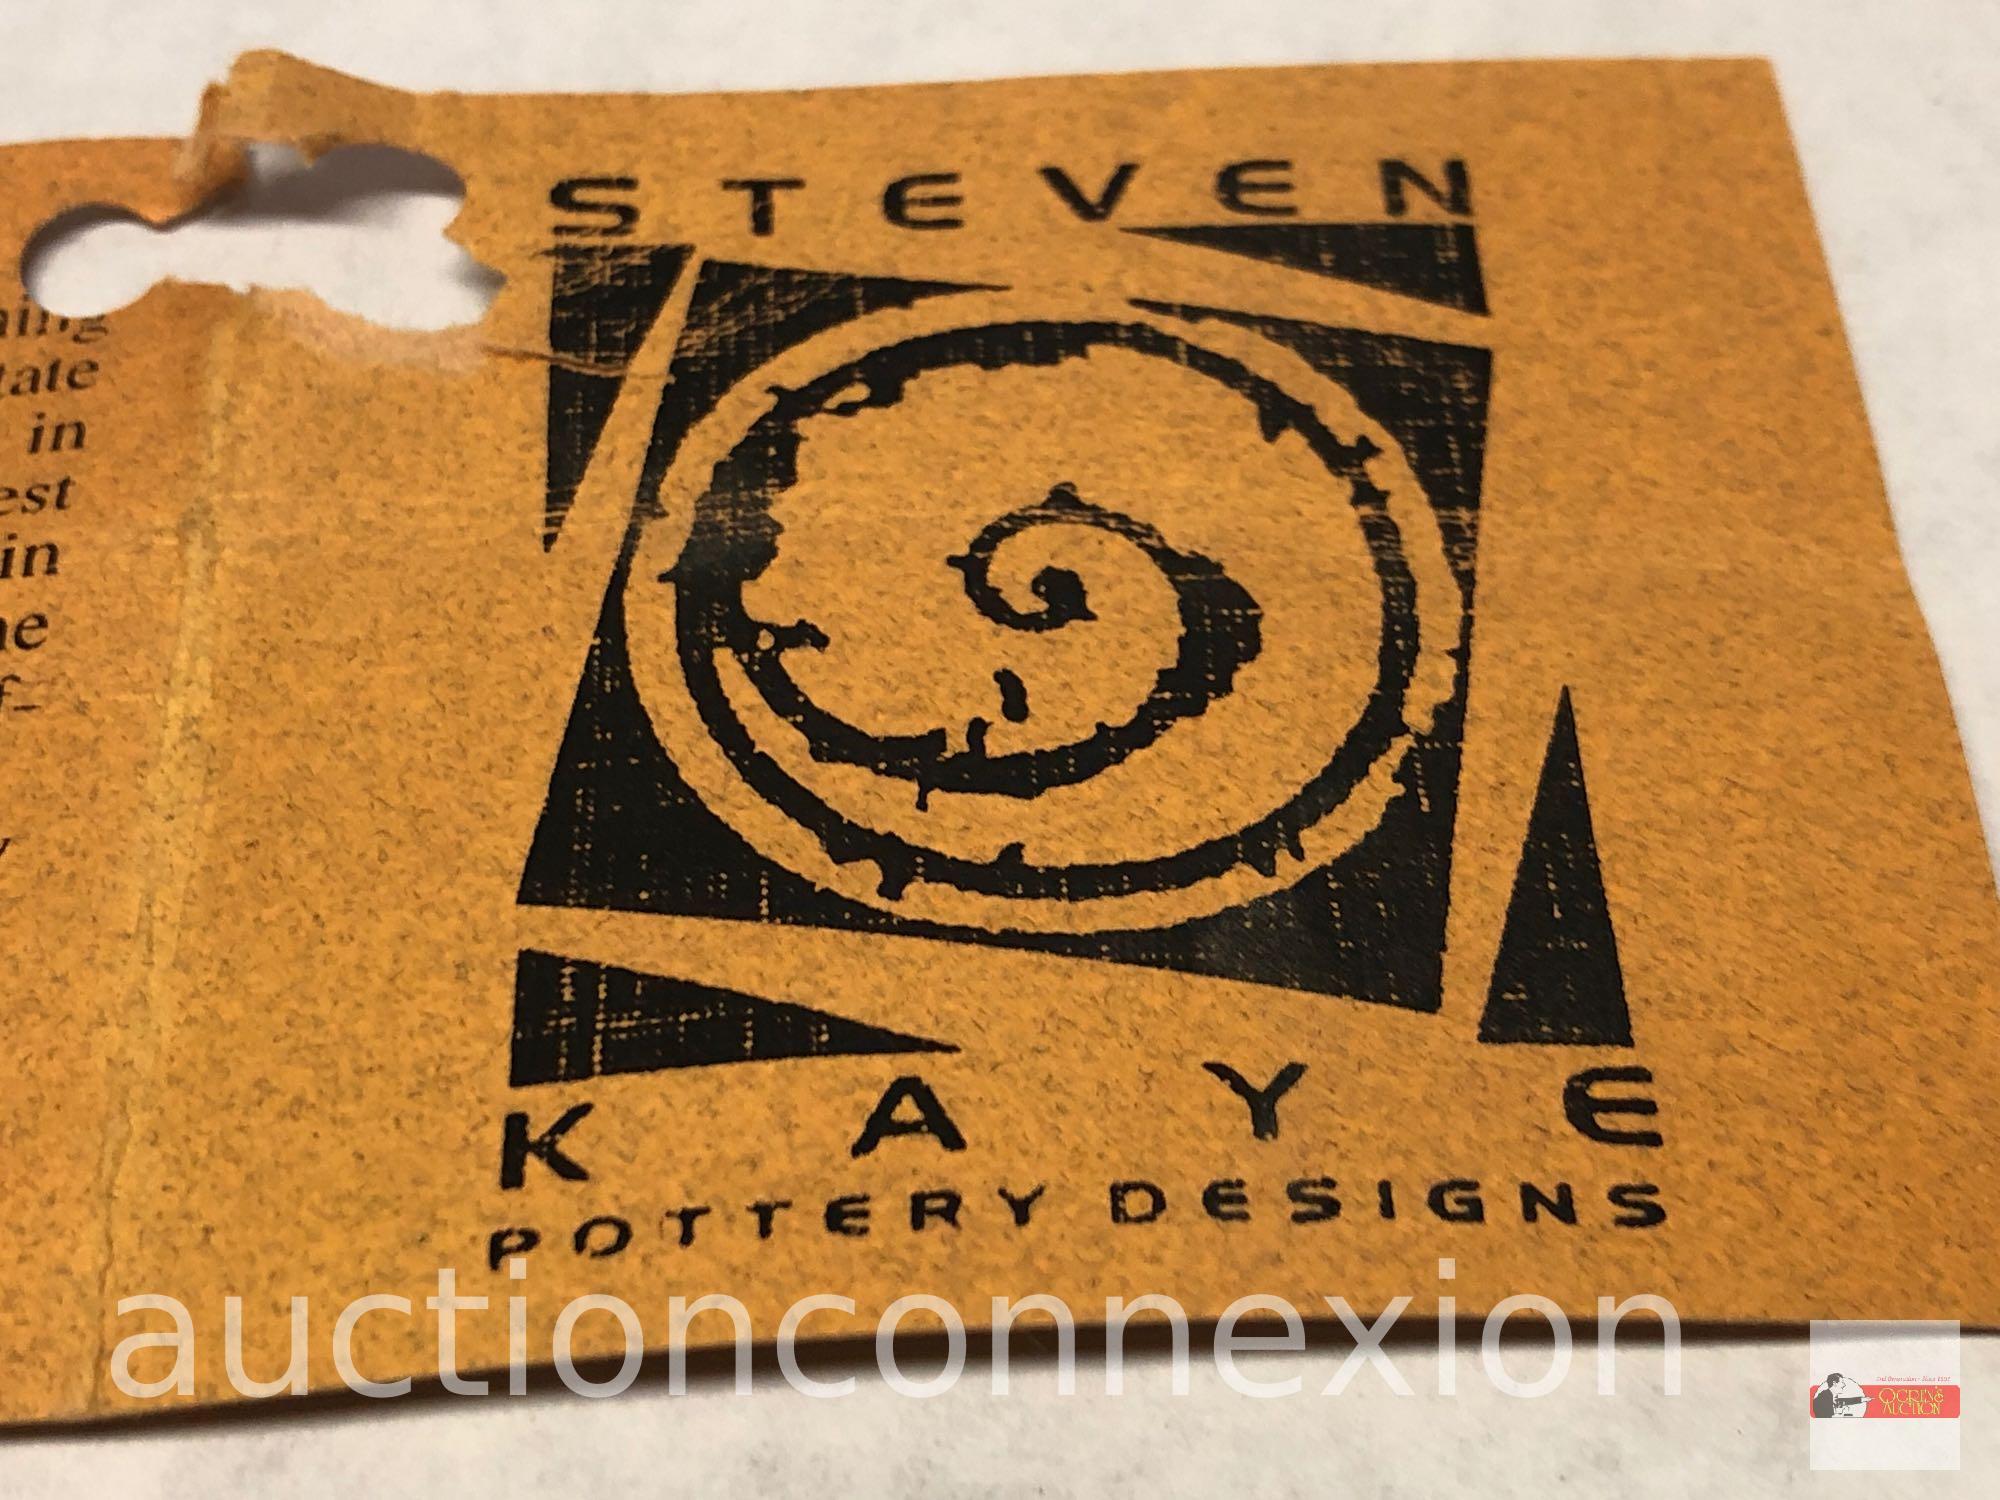 Pottery - Steven Kaye Designs, signed, dated 1998, Southwest stled vase